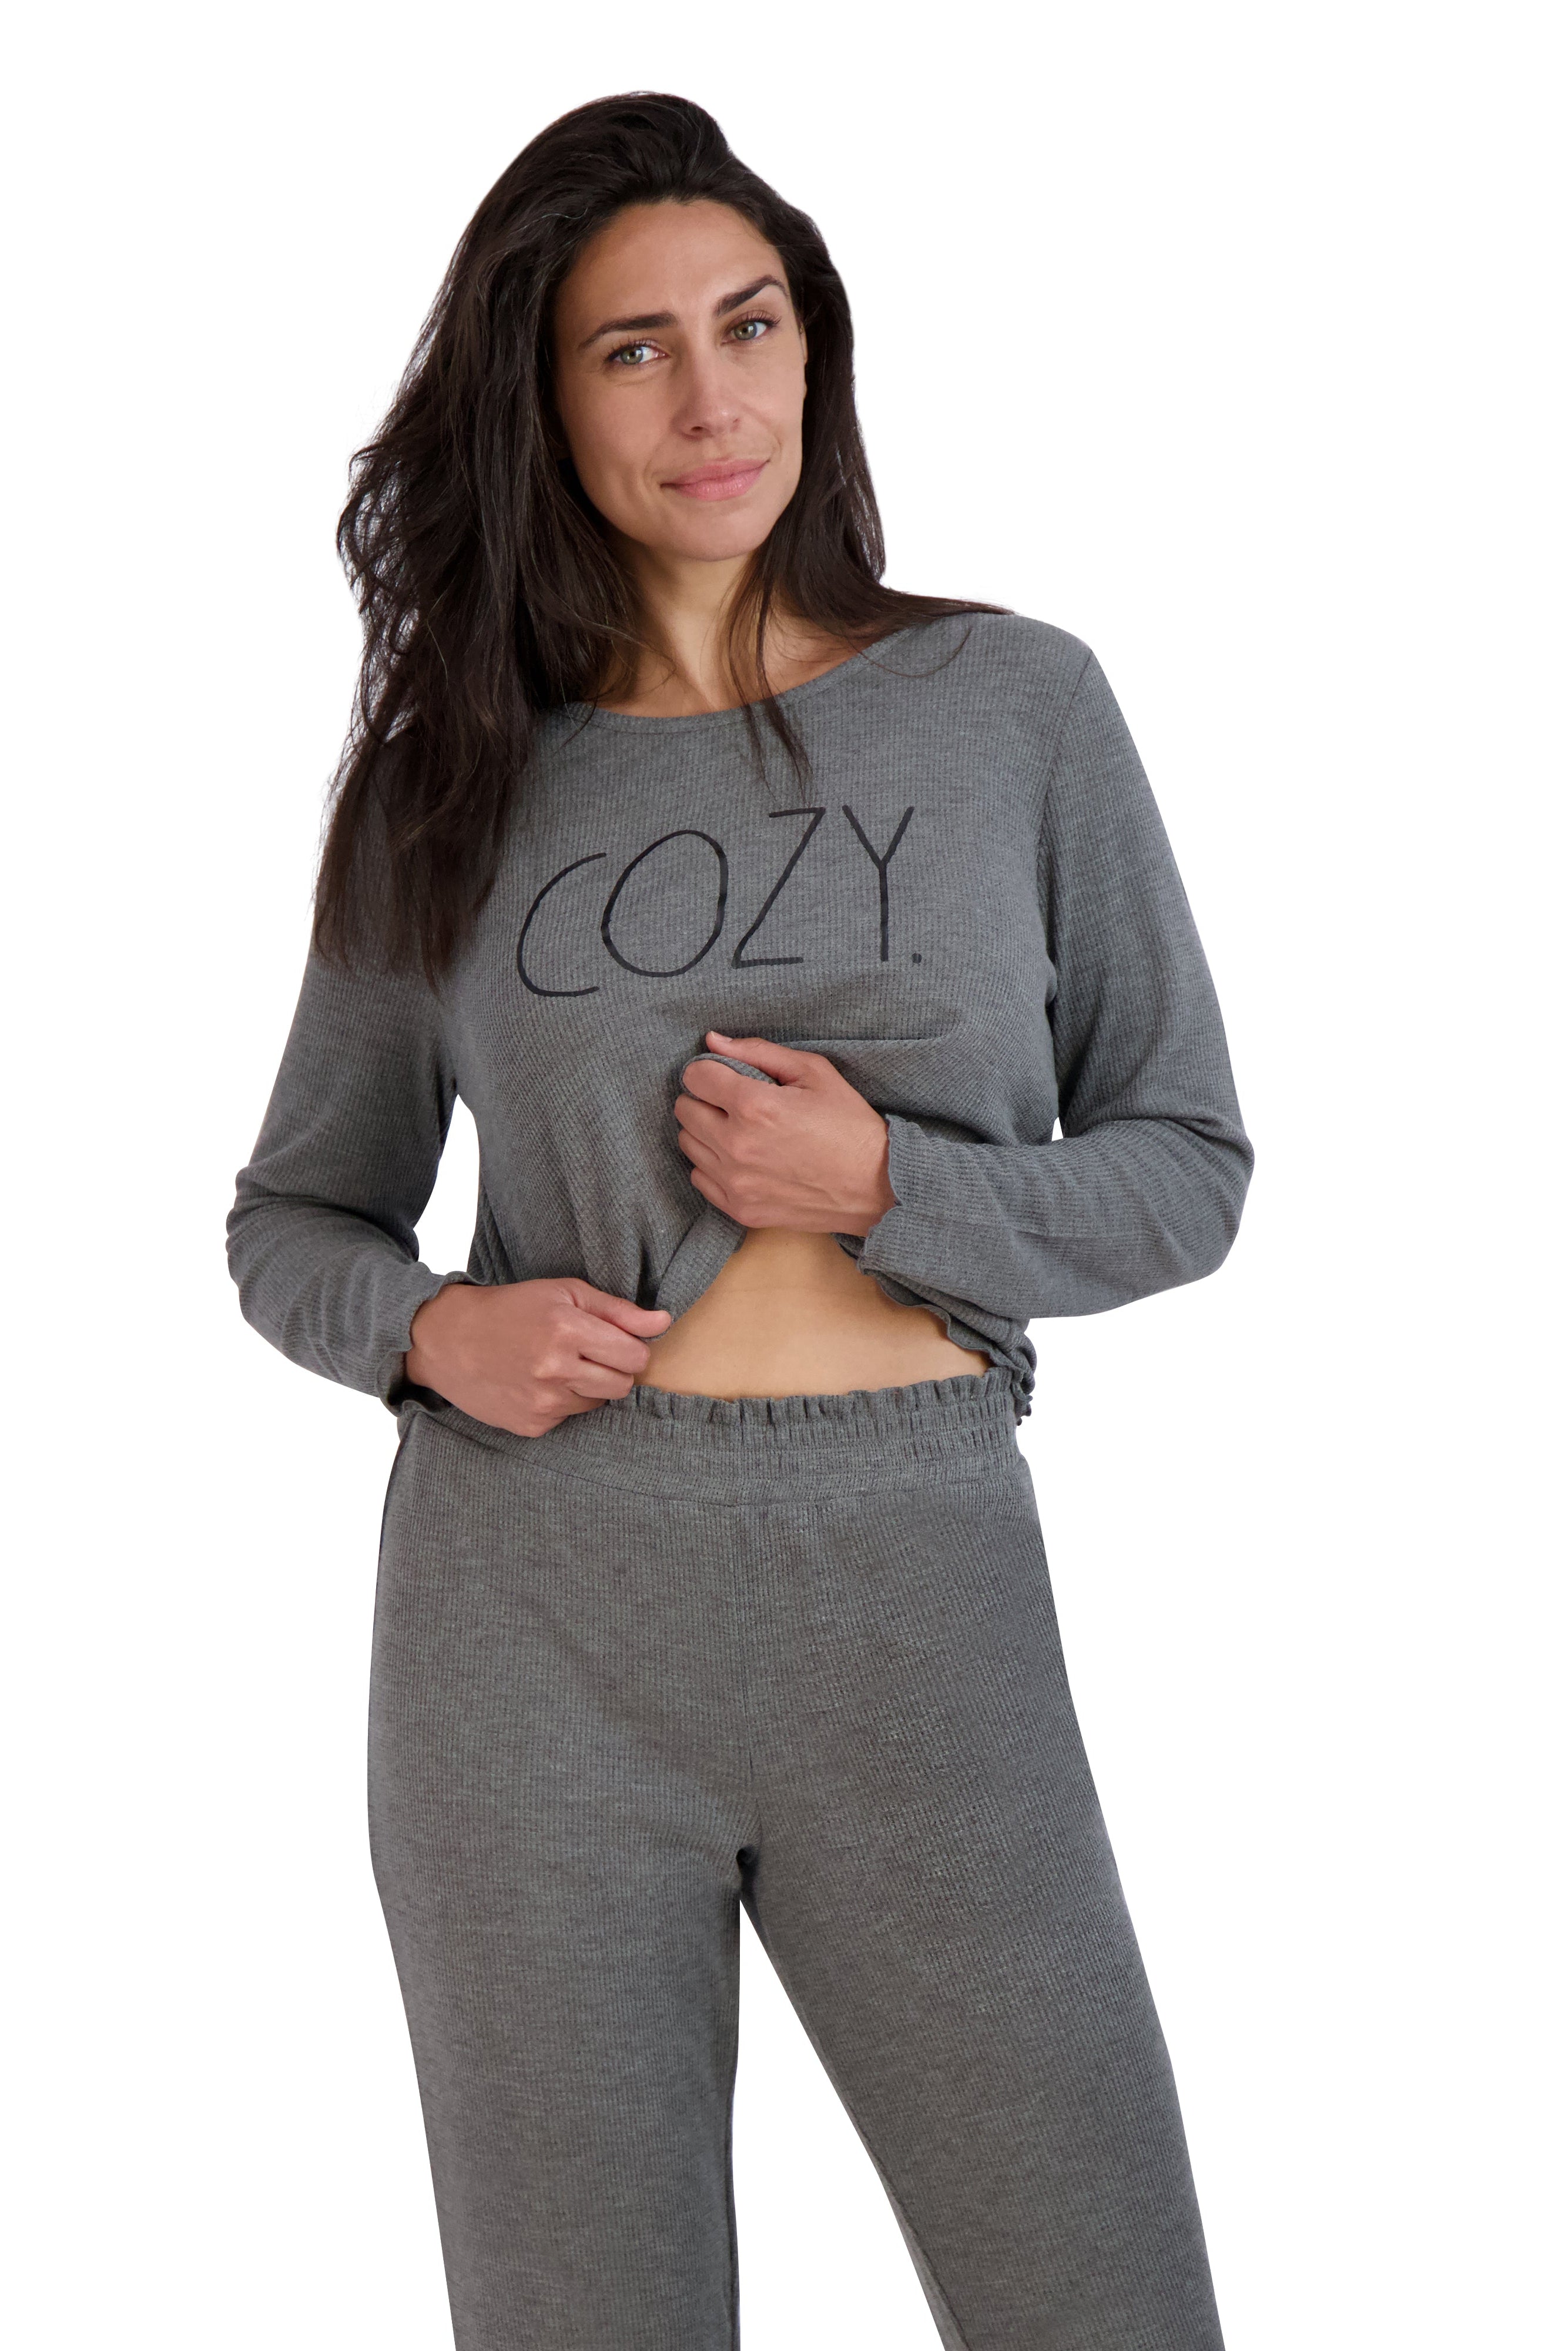 Women's "COZY" Long Sleeve Top and Joggers Waffle Lettuce Hem Pajama Set - Rae Dunn Wear